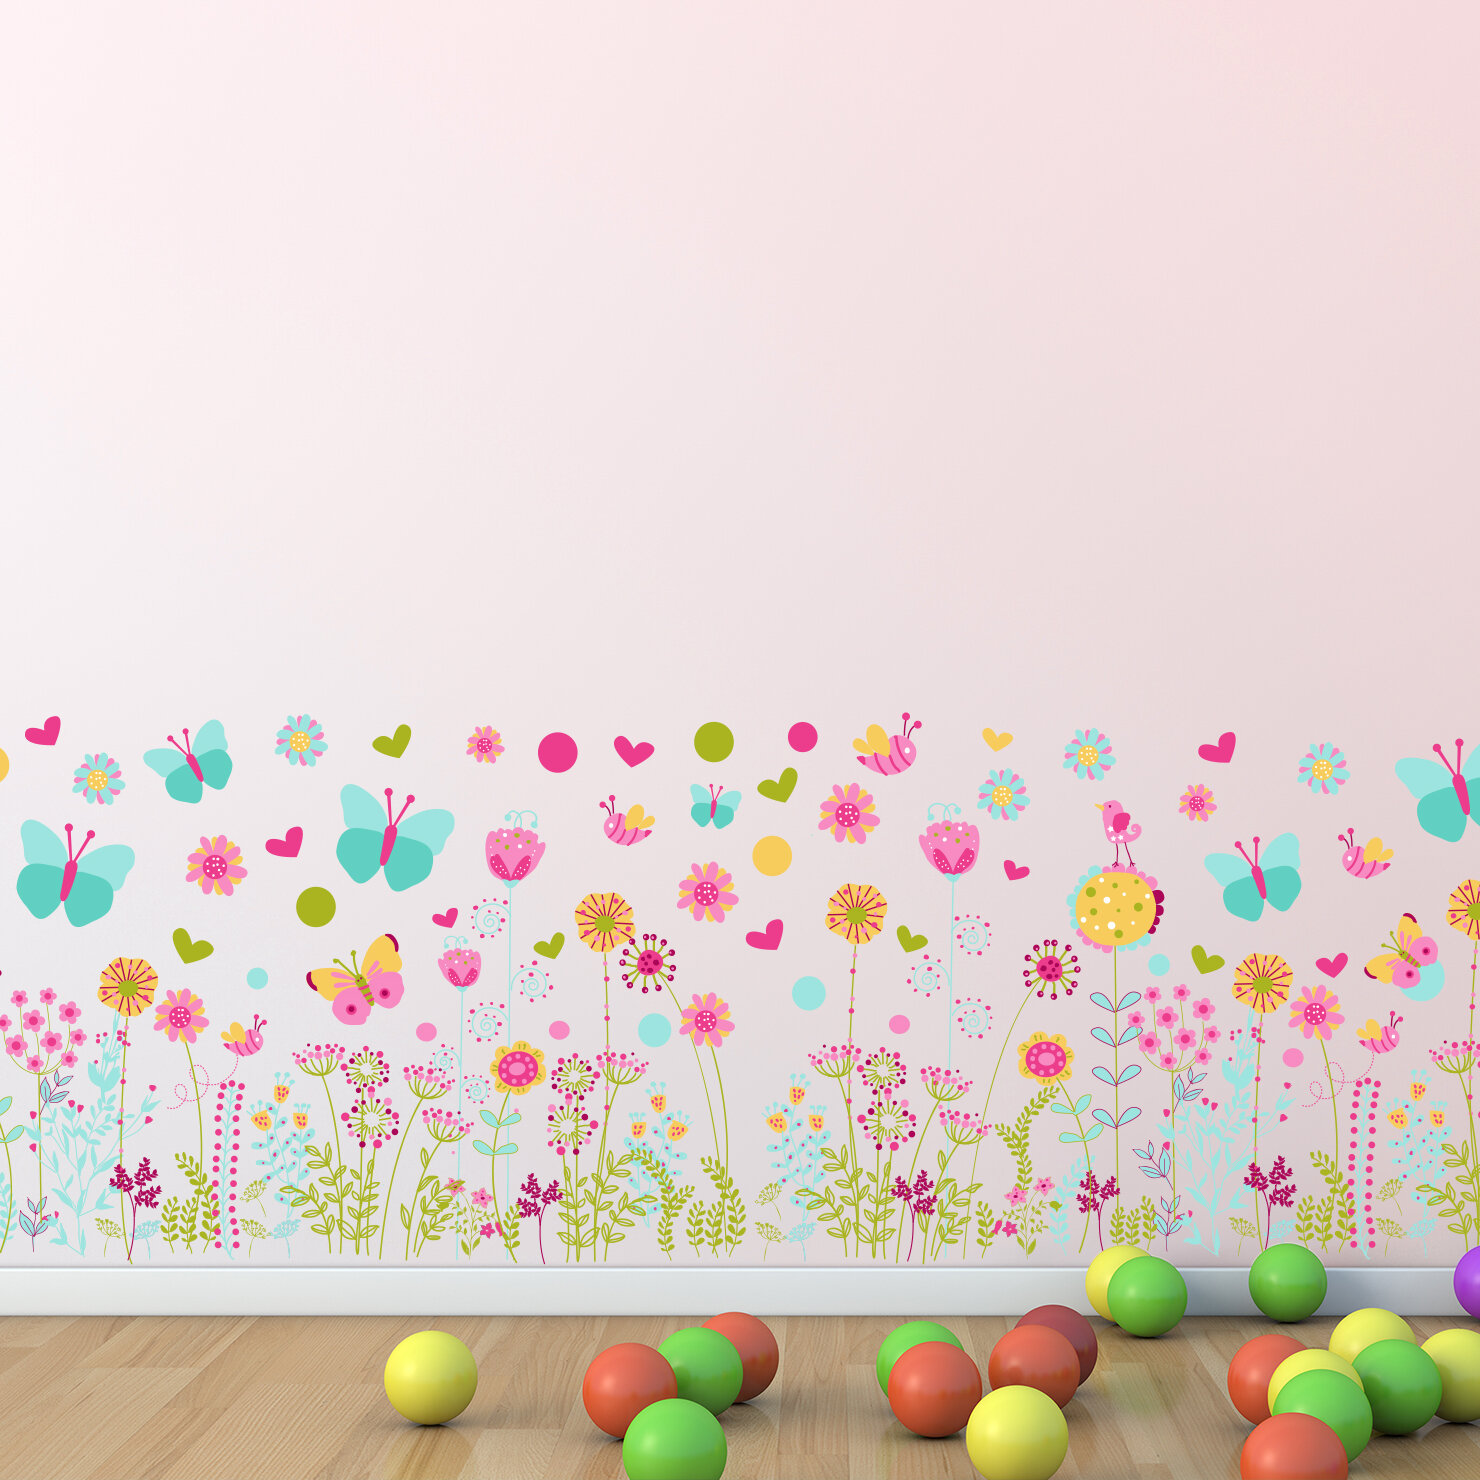 Walplus Wall Sticker Decal Wall Art Colourful Flower Photo Frame with Butterflie